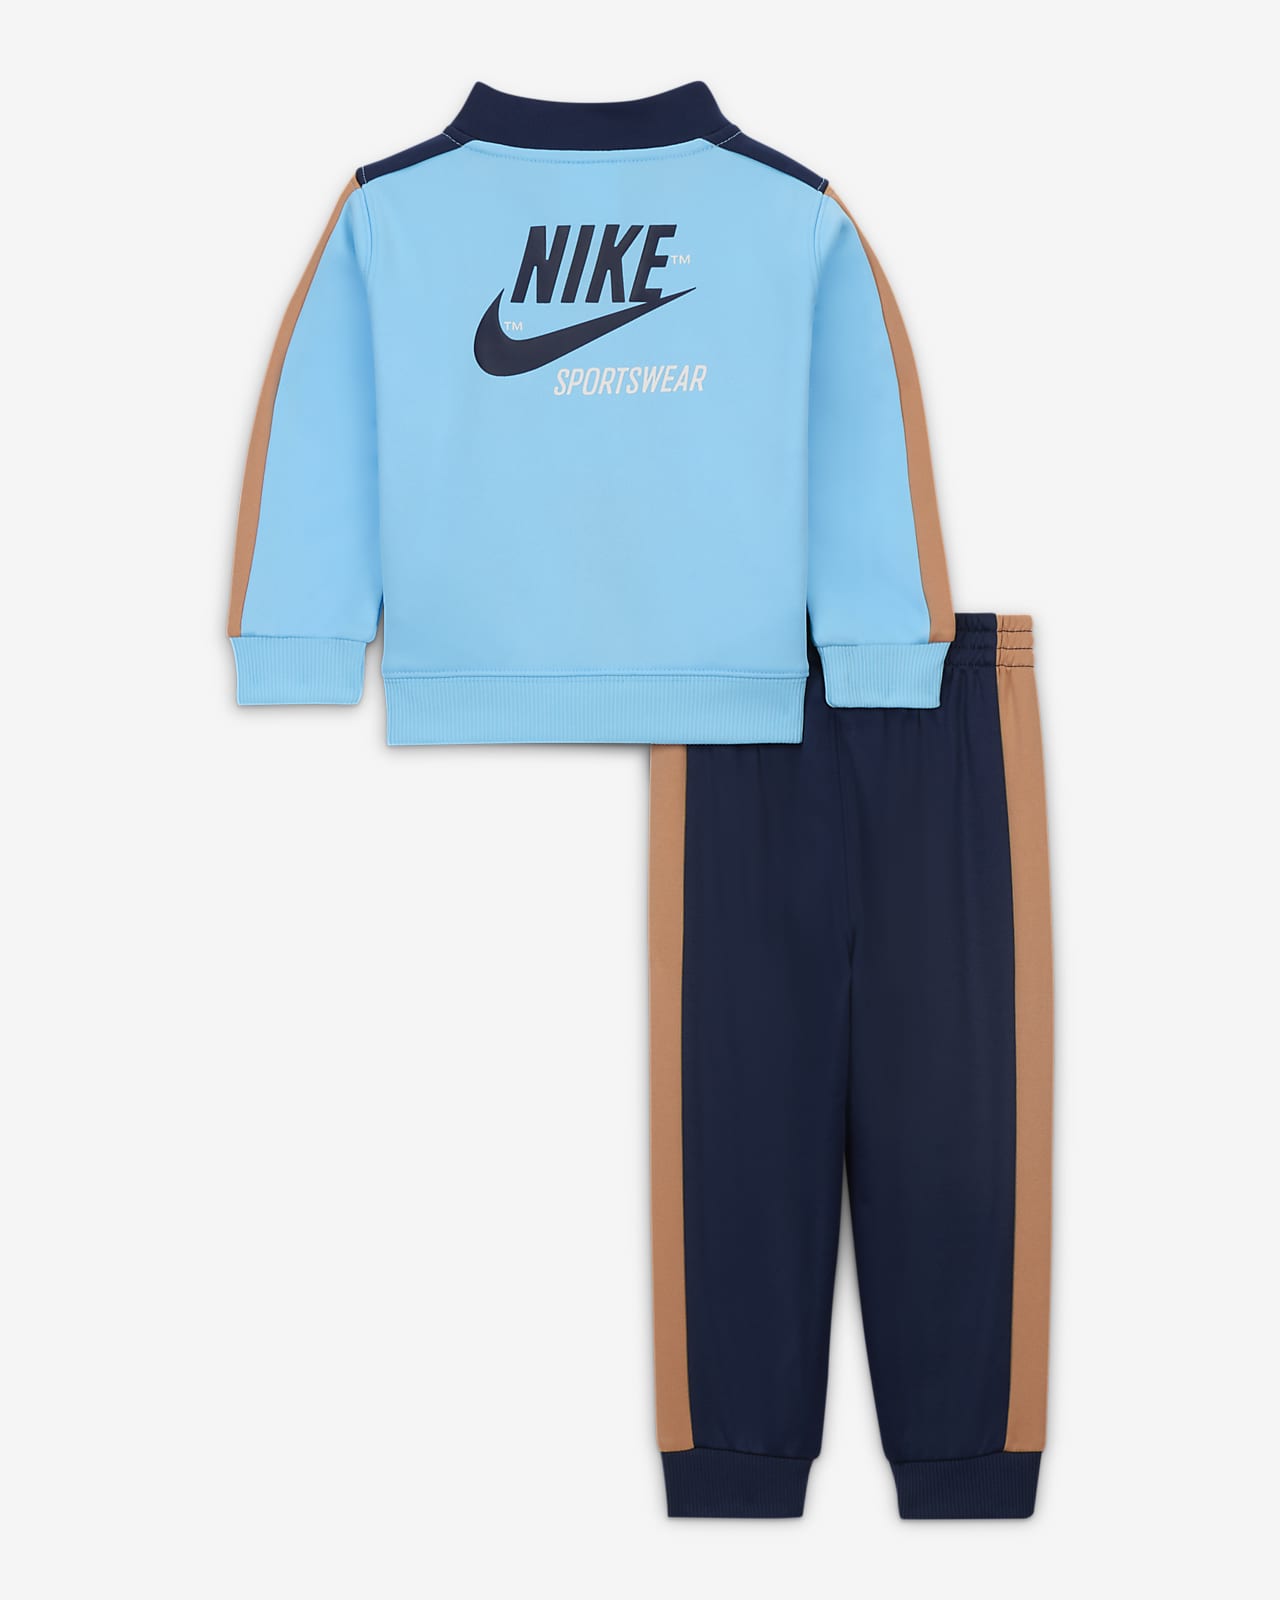 Nike Sportswear Dri-FIT Baby (12-24M) Tricot Set.